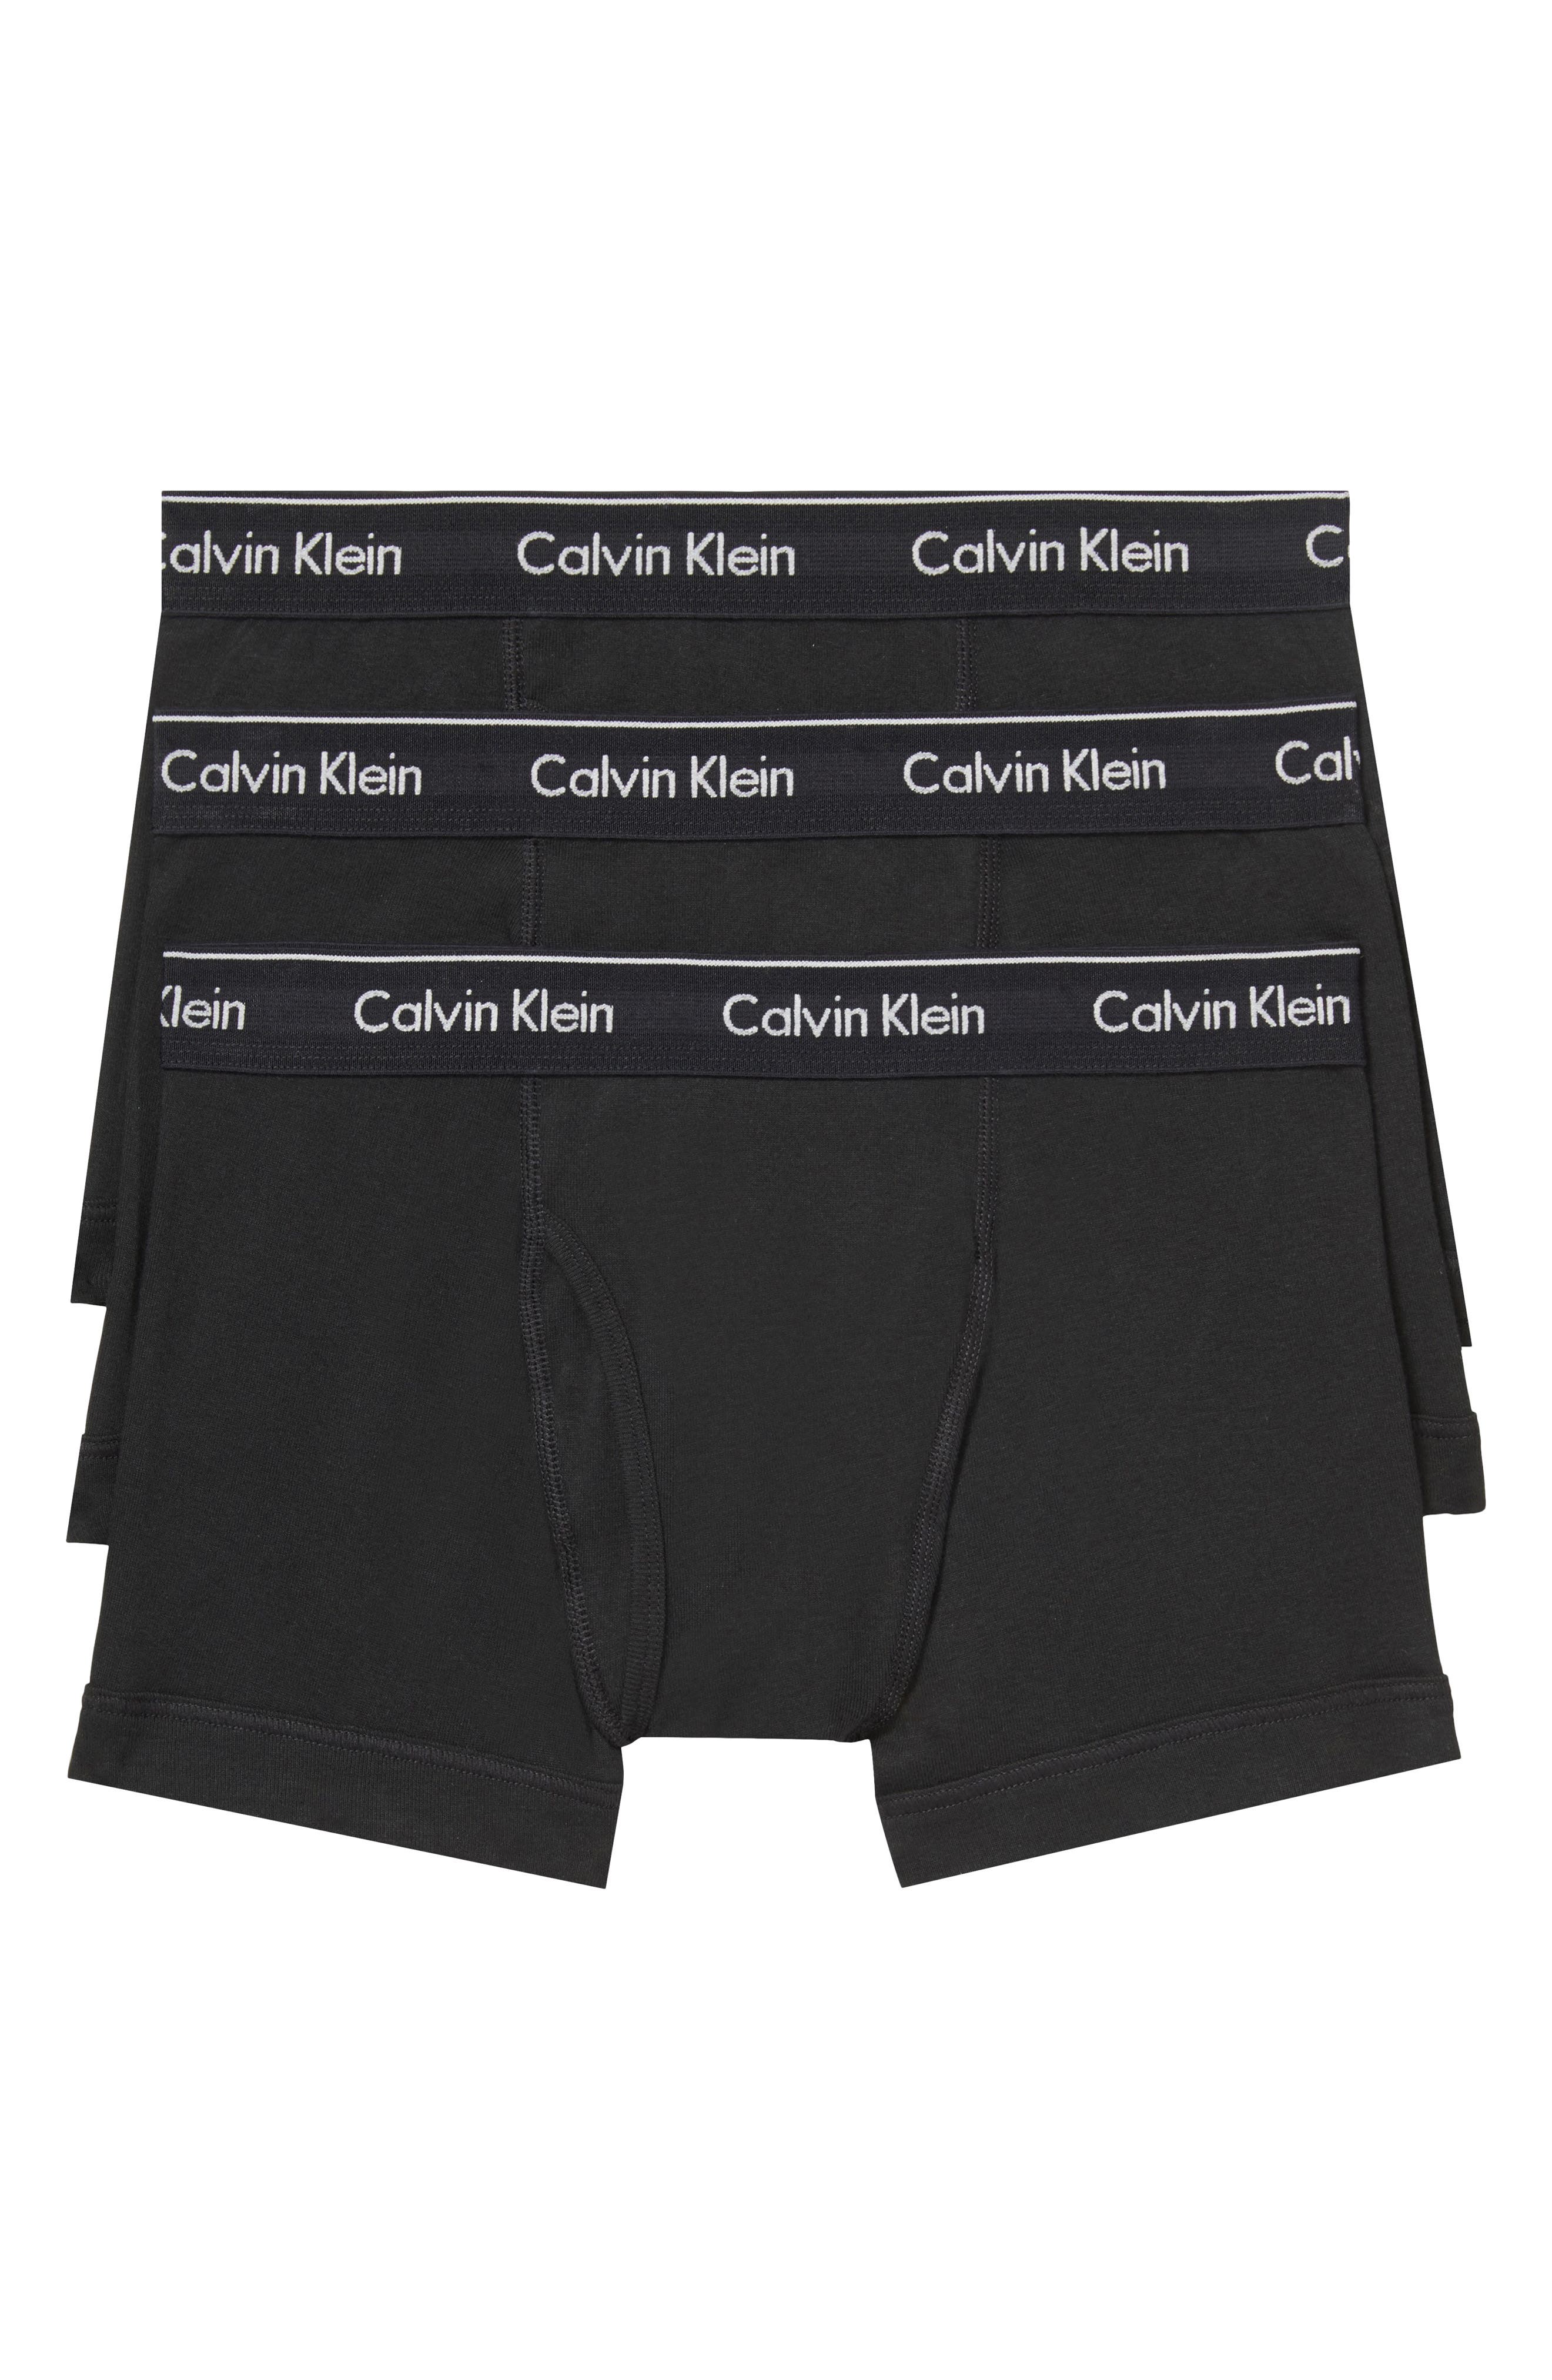 for Men Calvin Klein 6-pack No Show Socks in Grey Mens Underwear Calvin Klein Underwear Black 